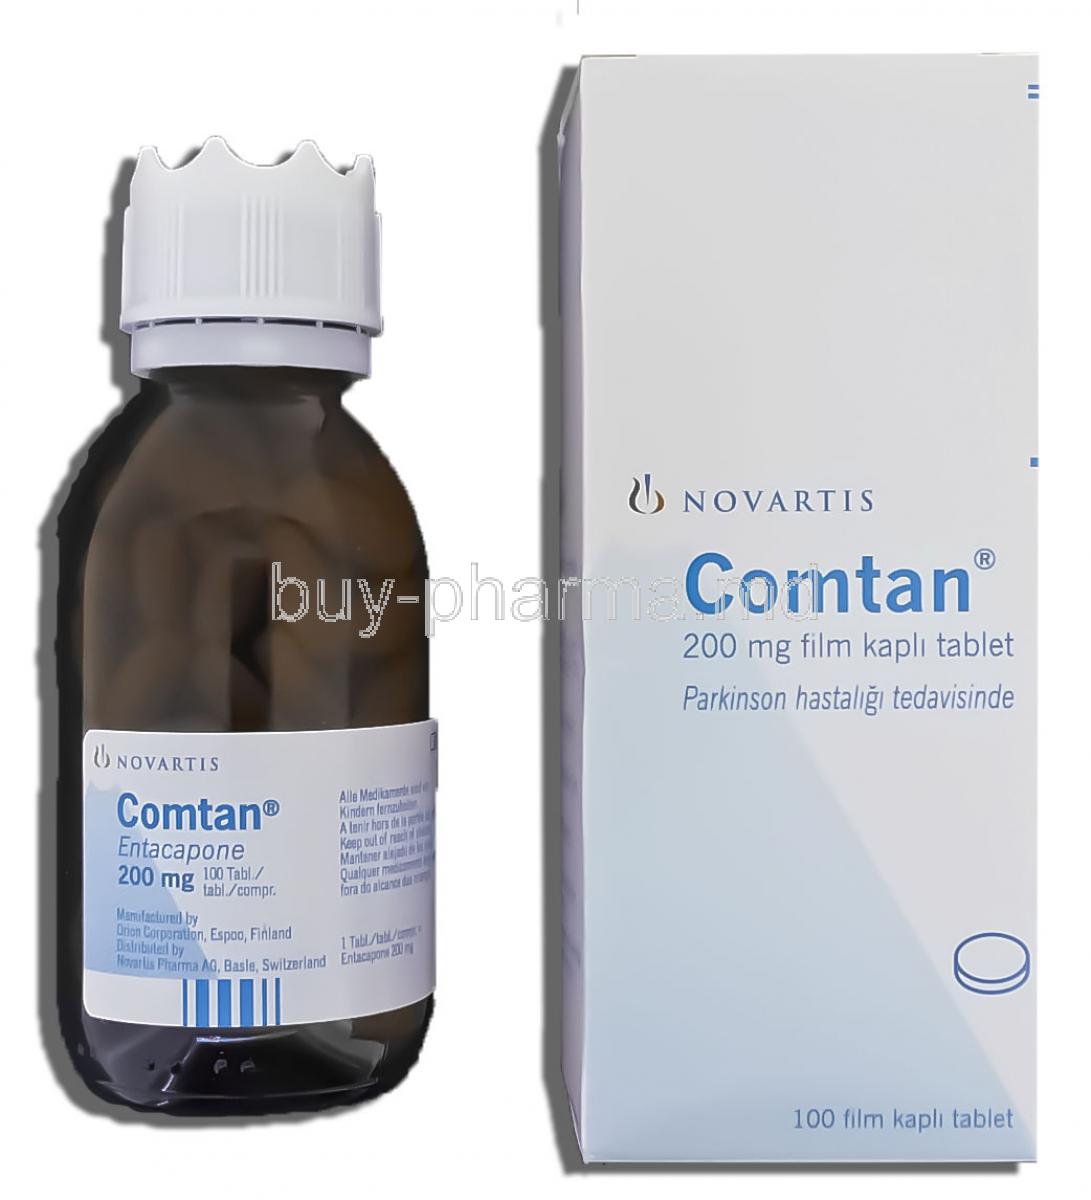 Comtan, Entacapone 200 mg